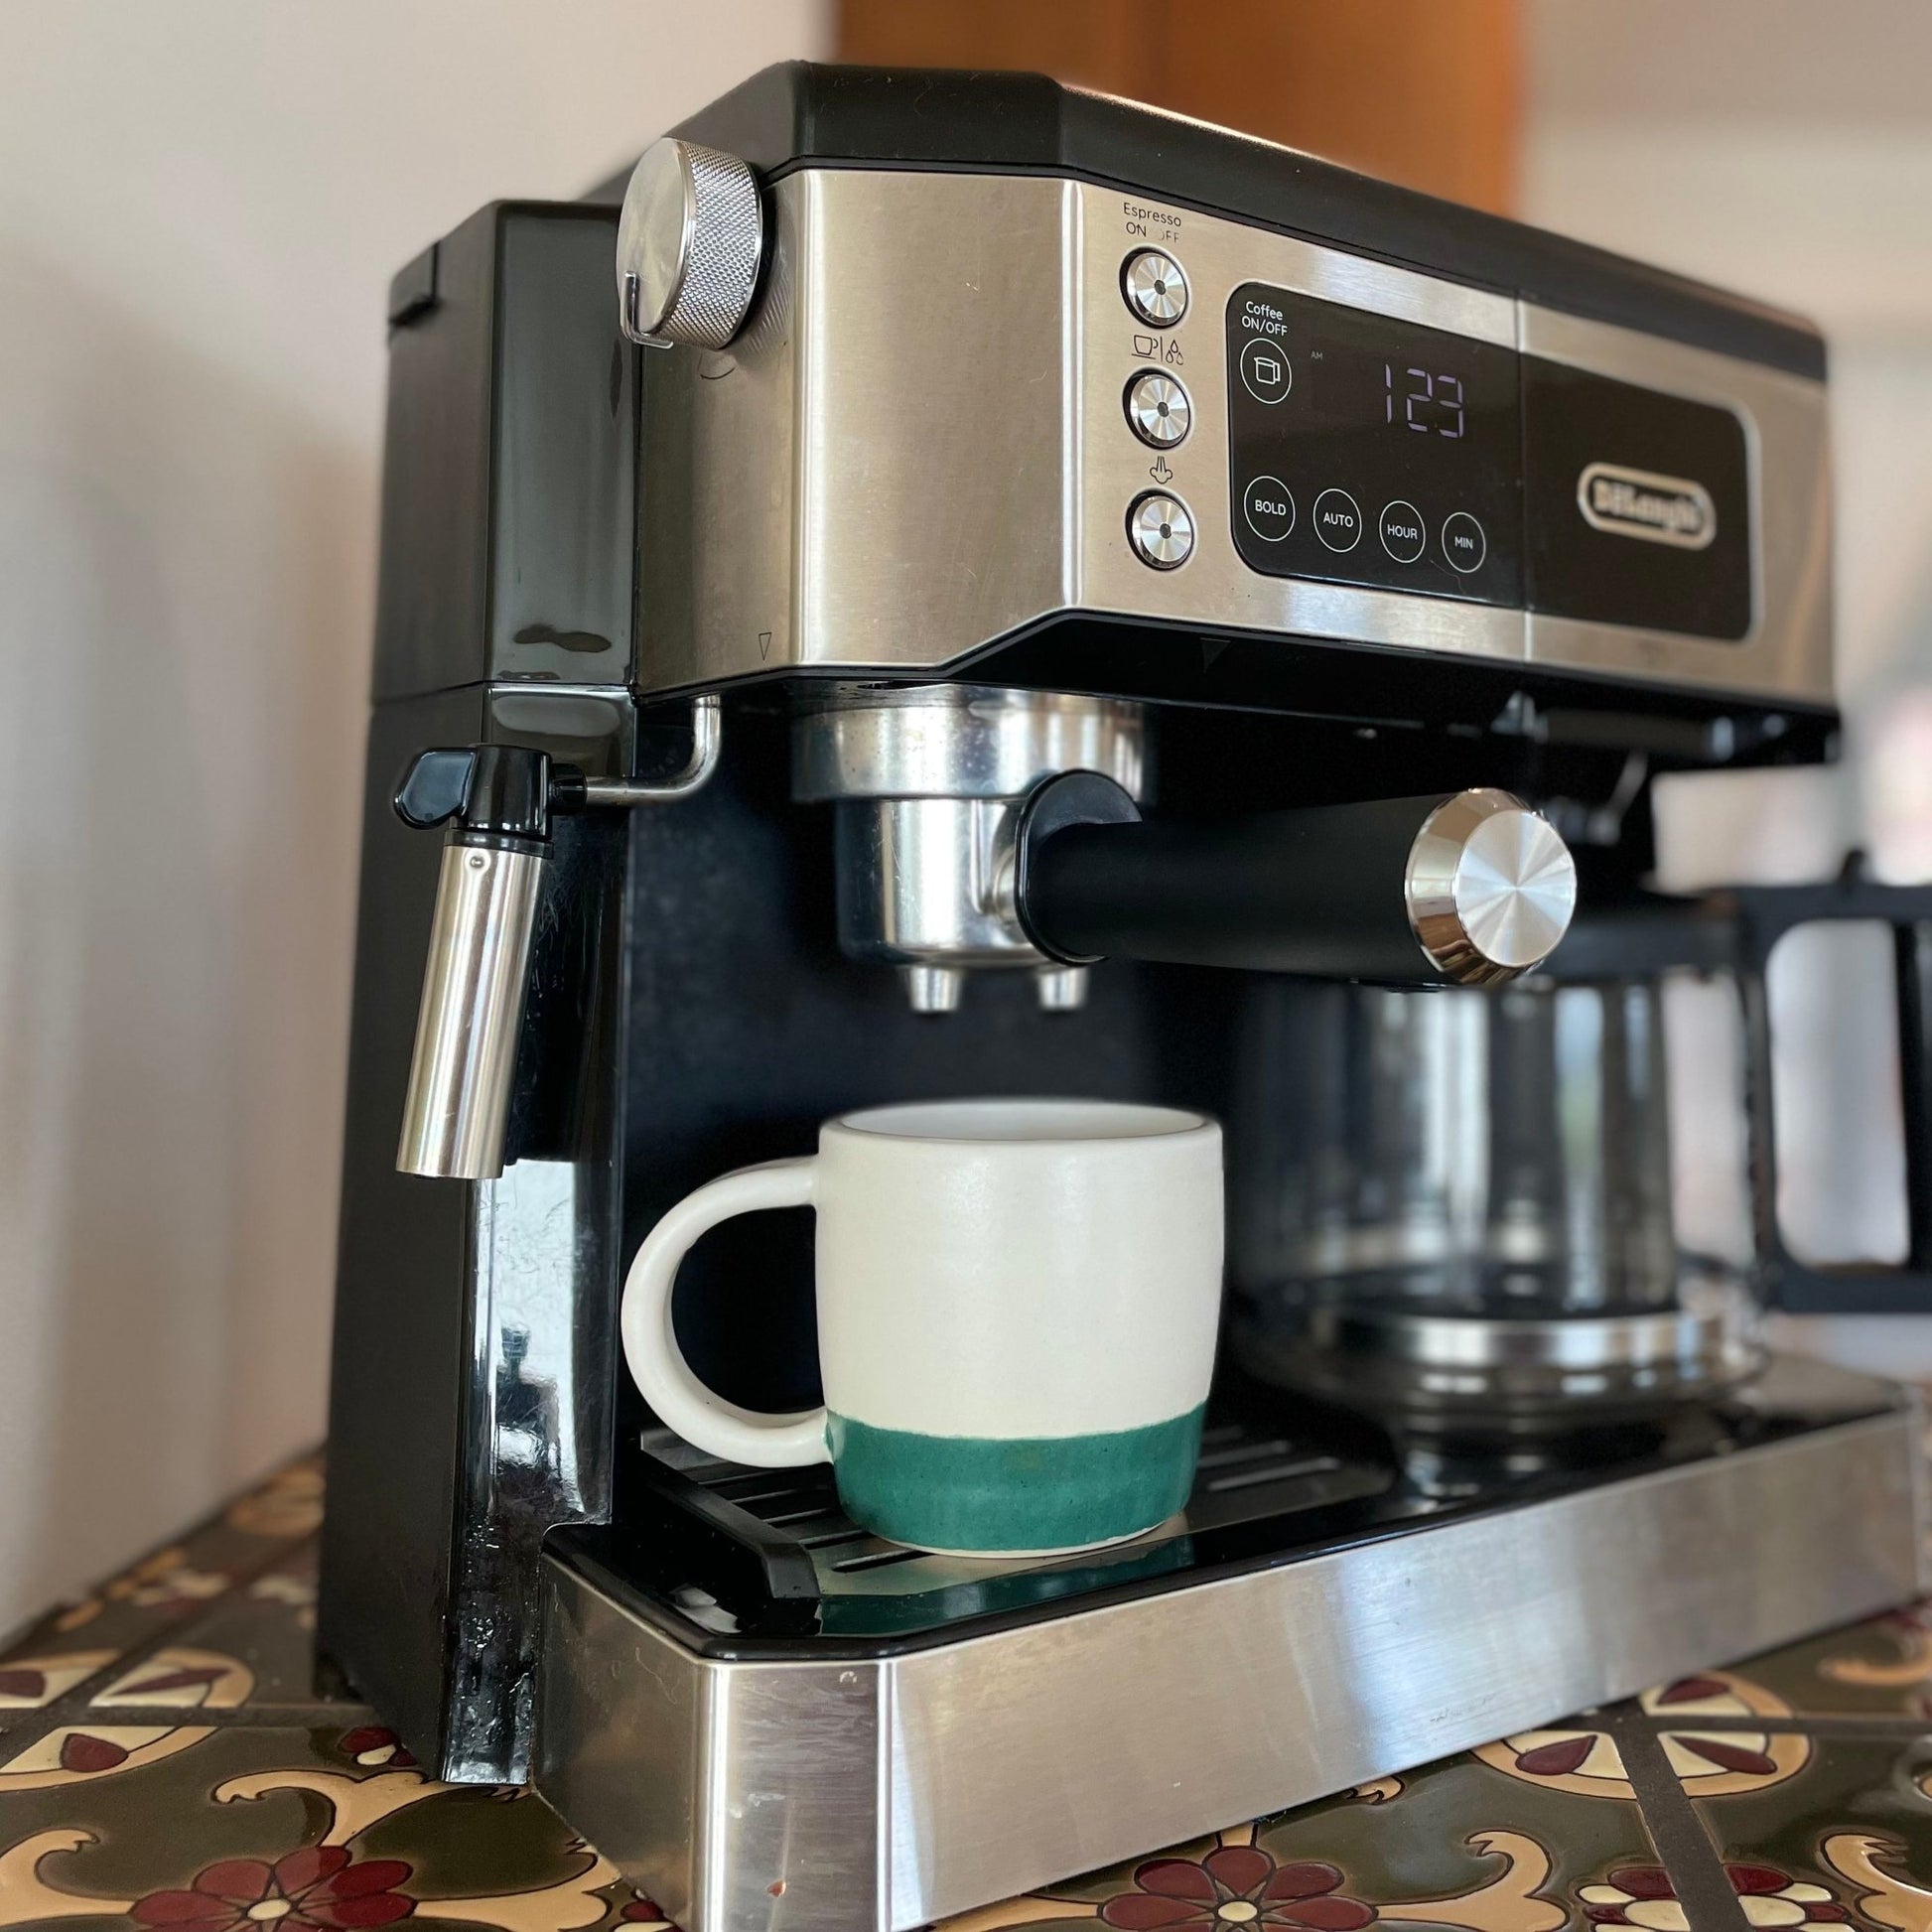 Espresso Mug in an espresso machine